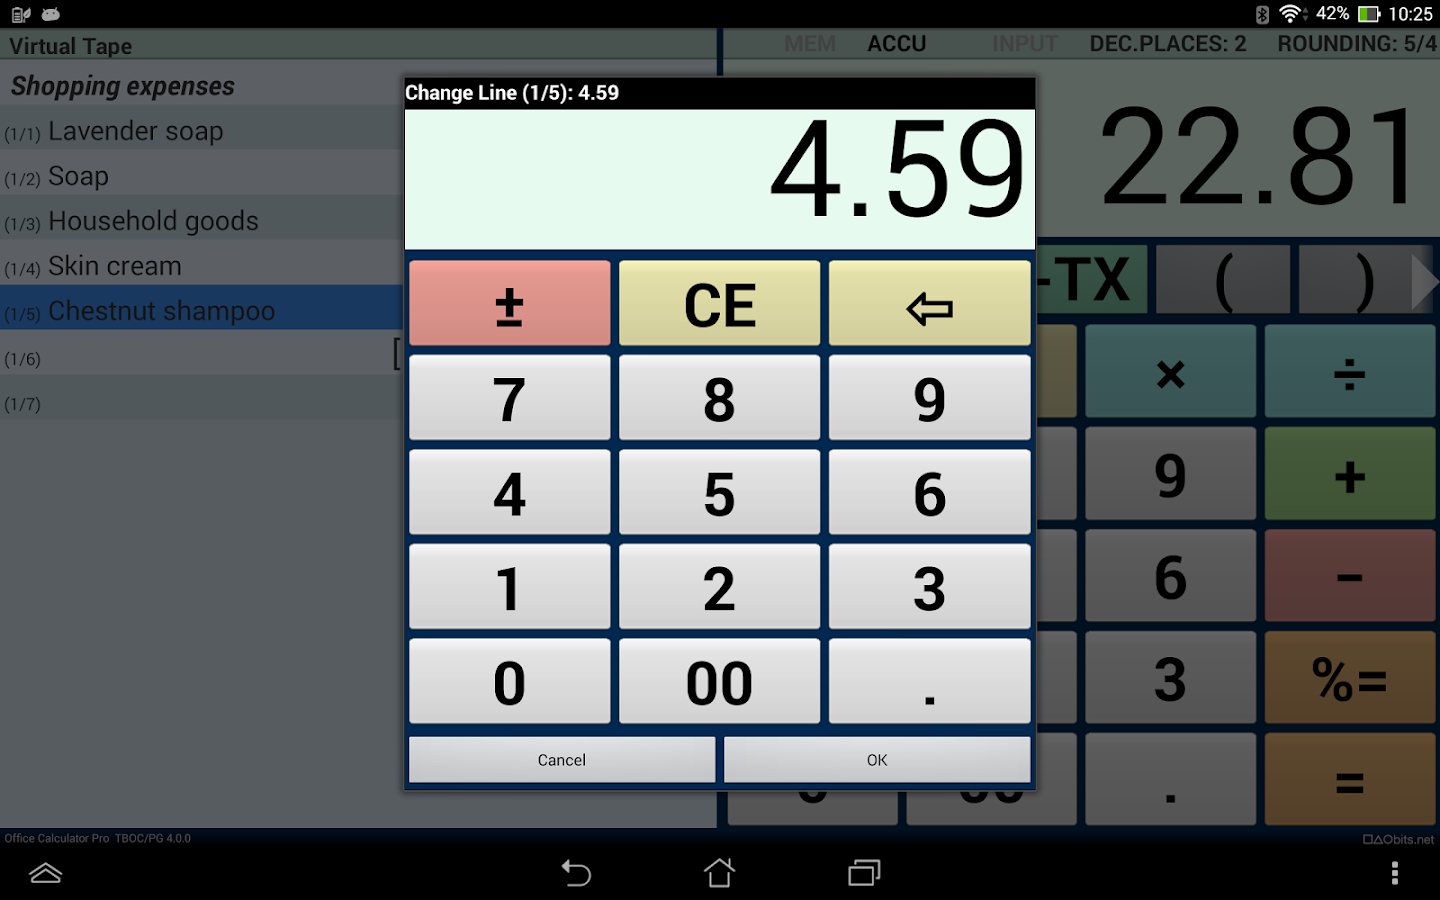 Office Calculator Pro - screenshot